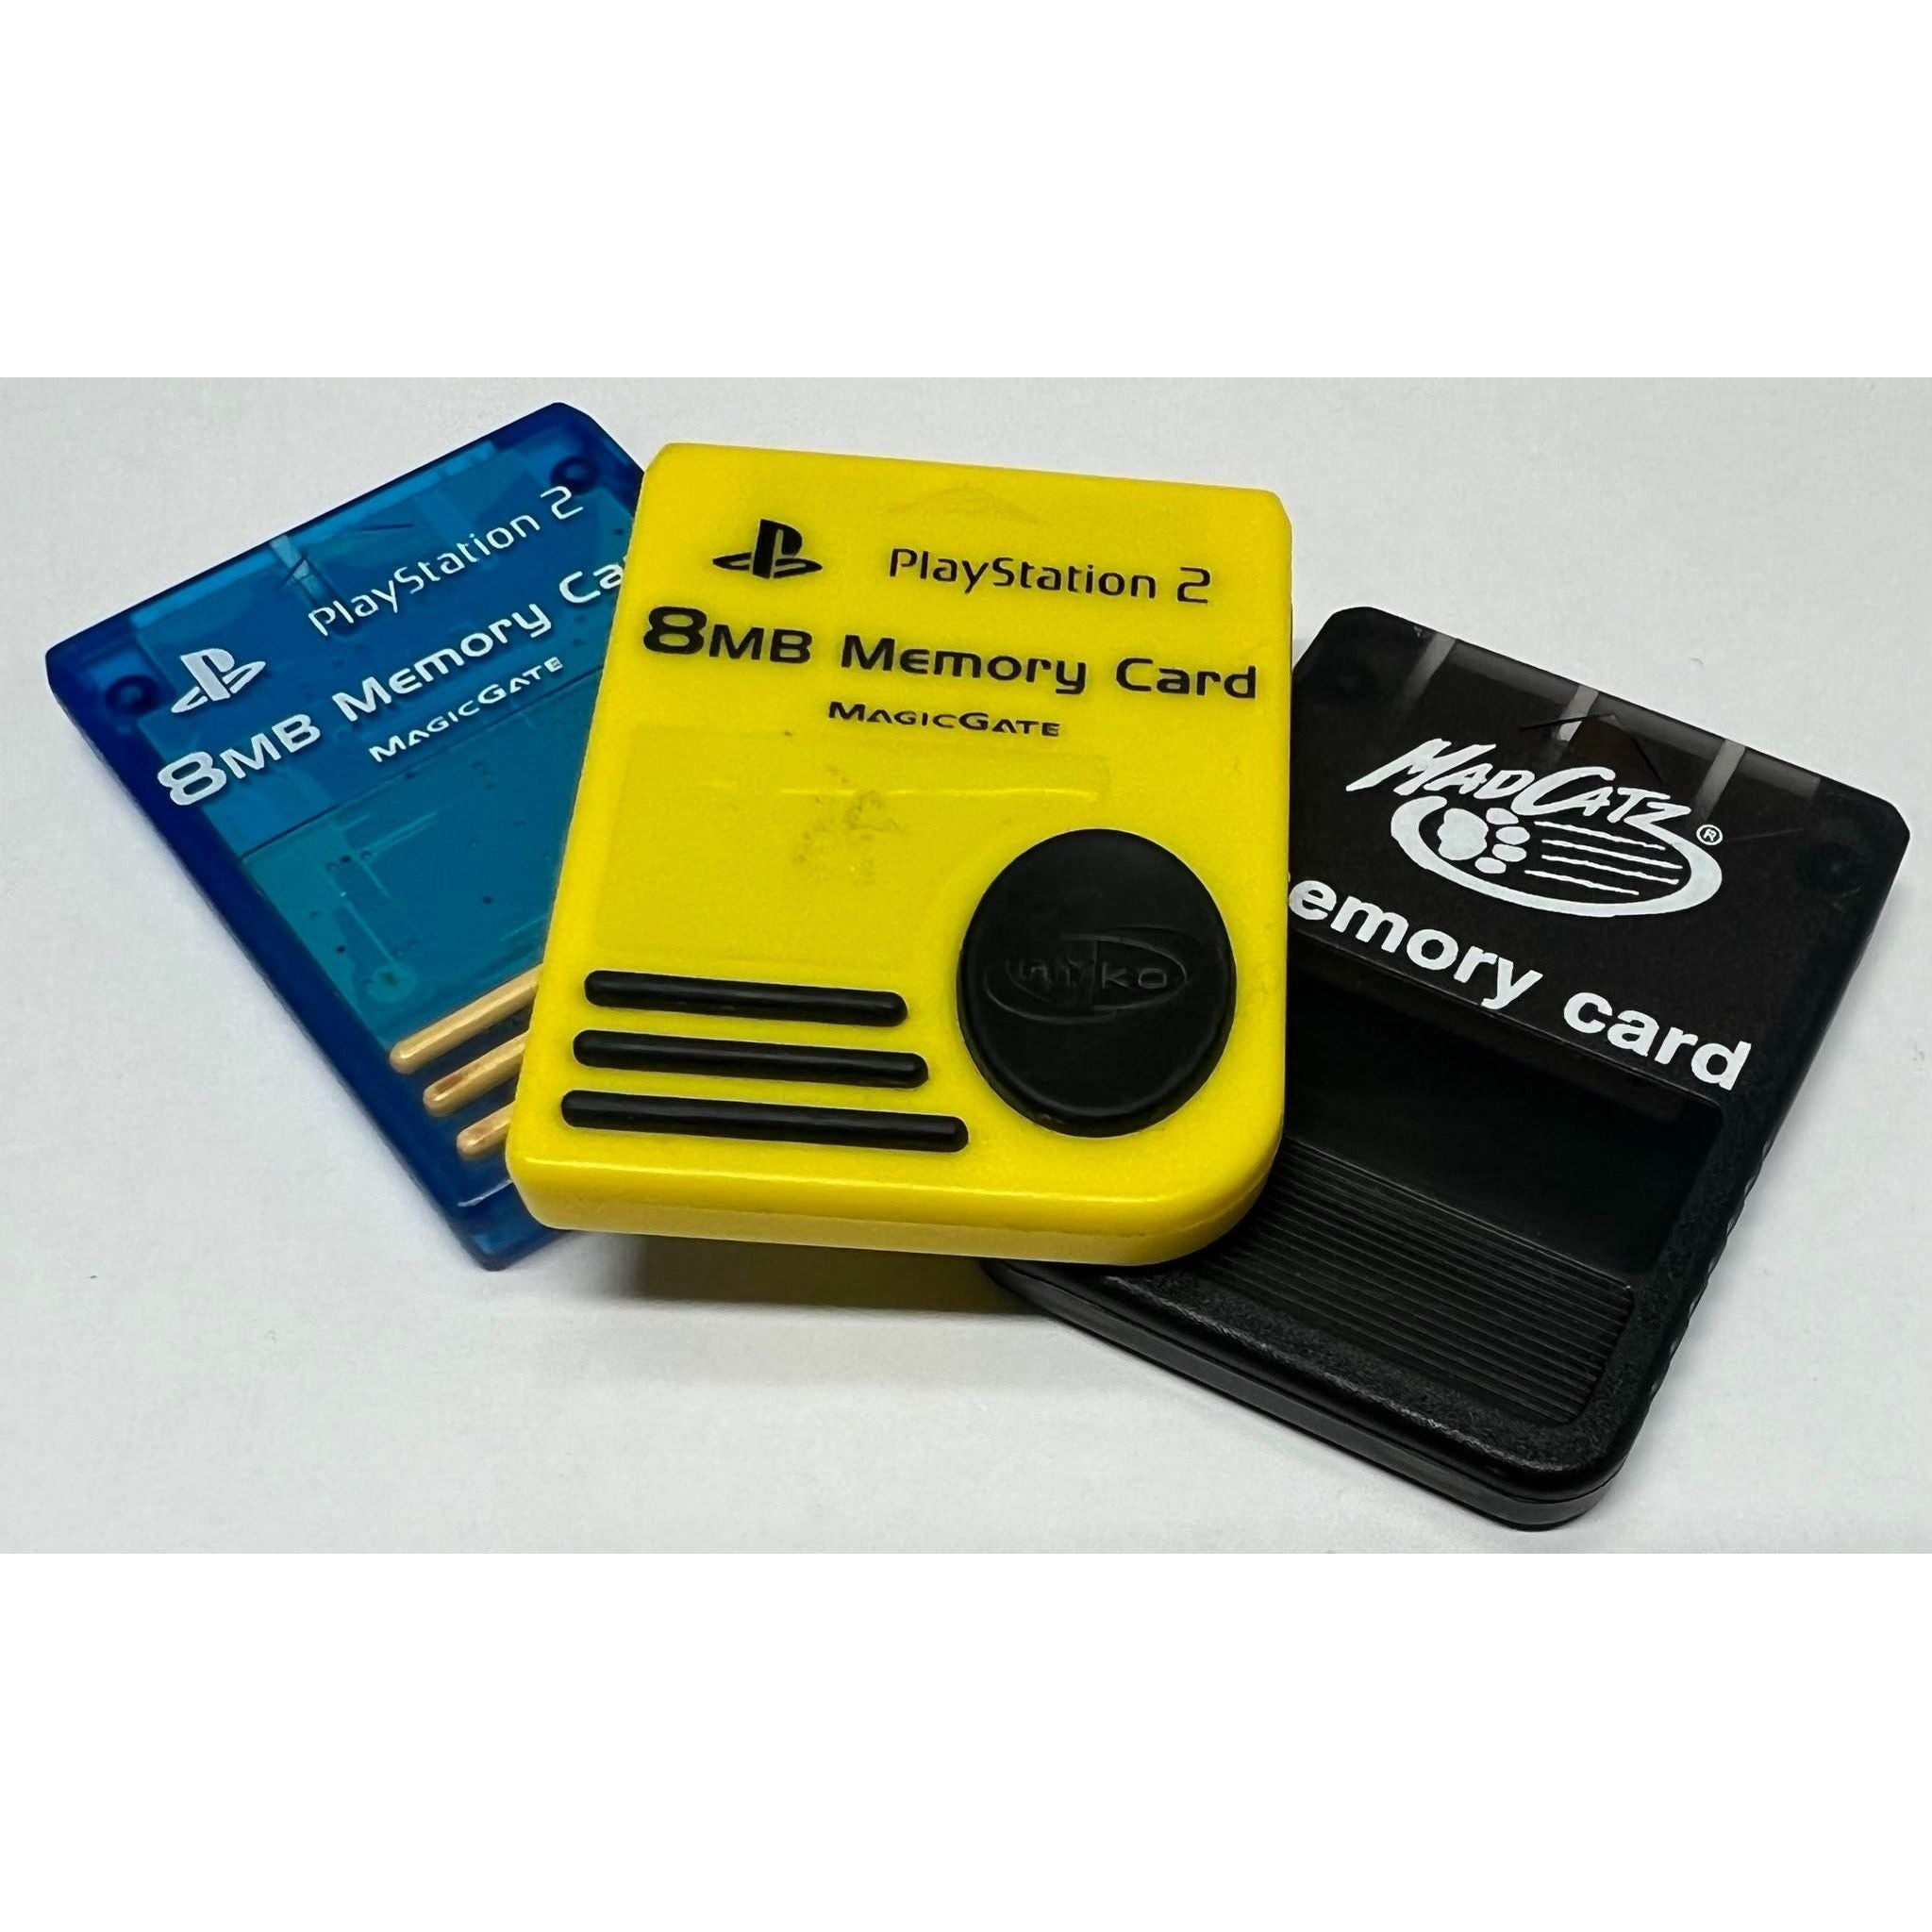 Playstation 2 (PS2) Non-OEM Memory Card